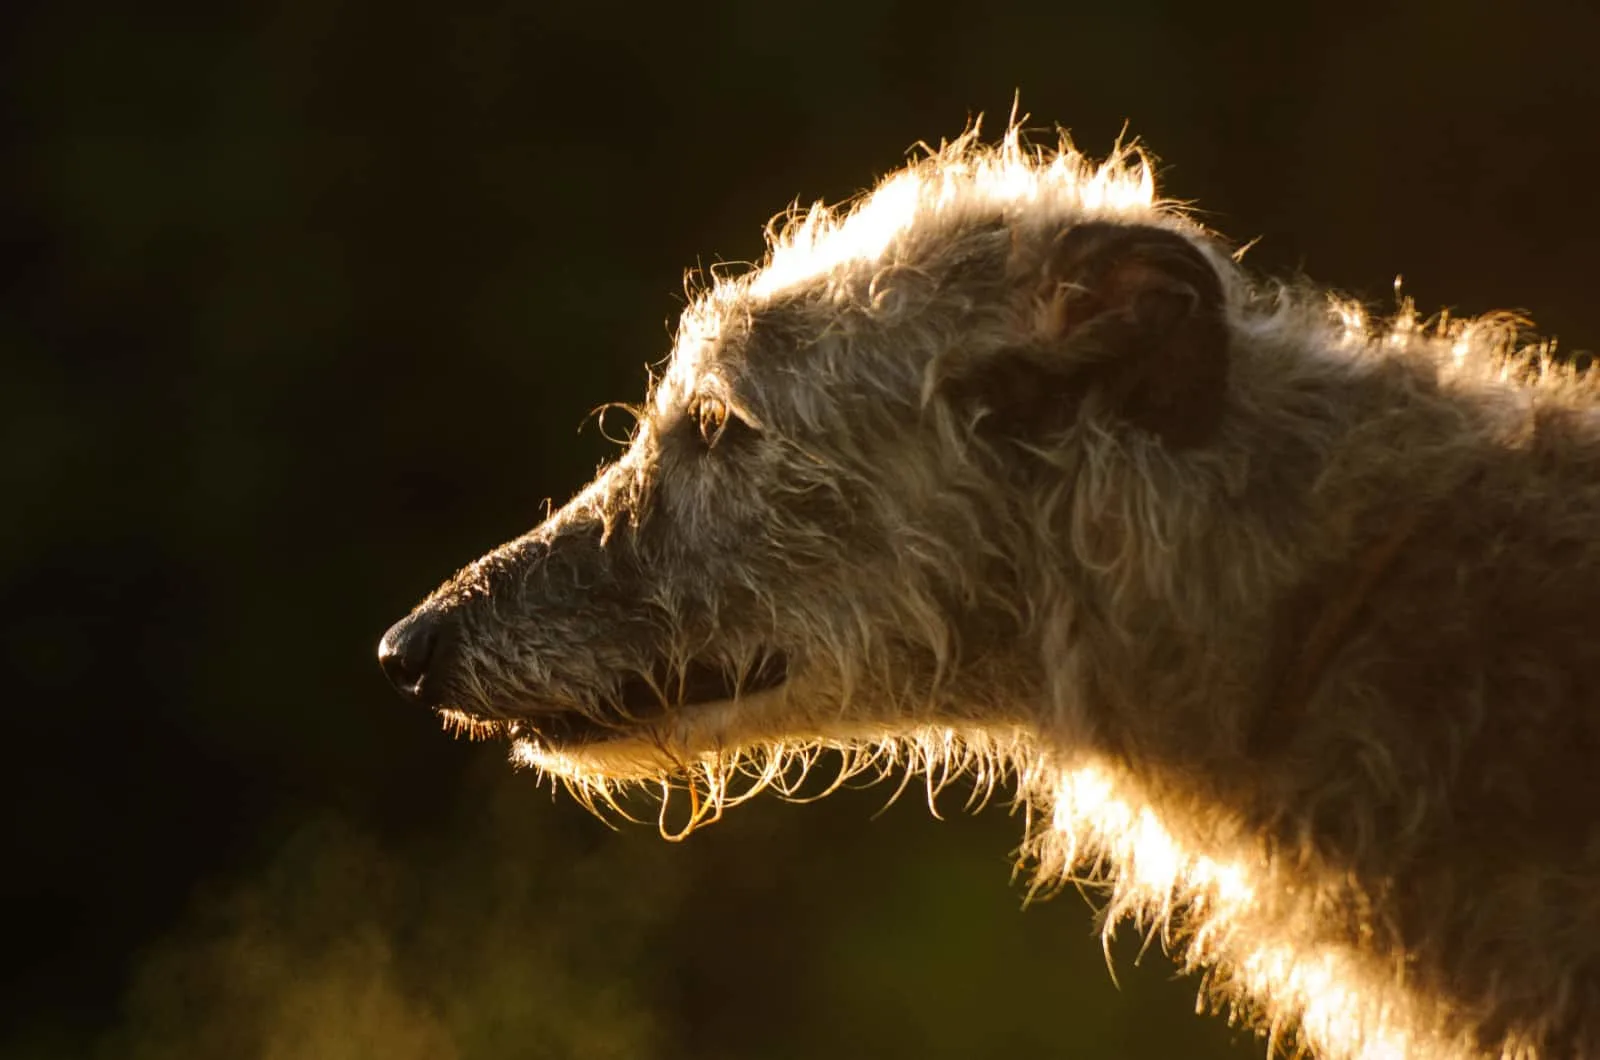 The Scottish Deerhound